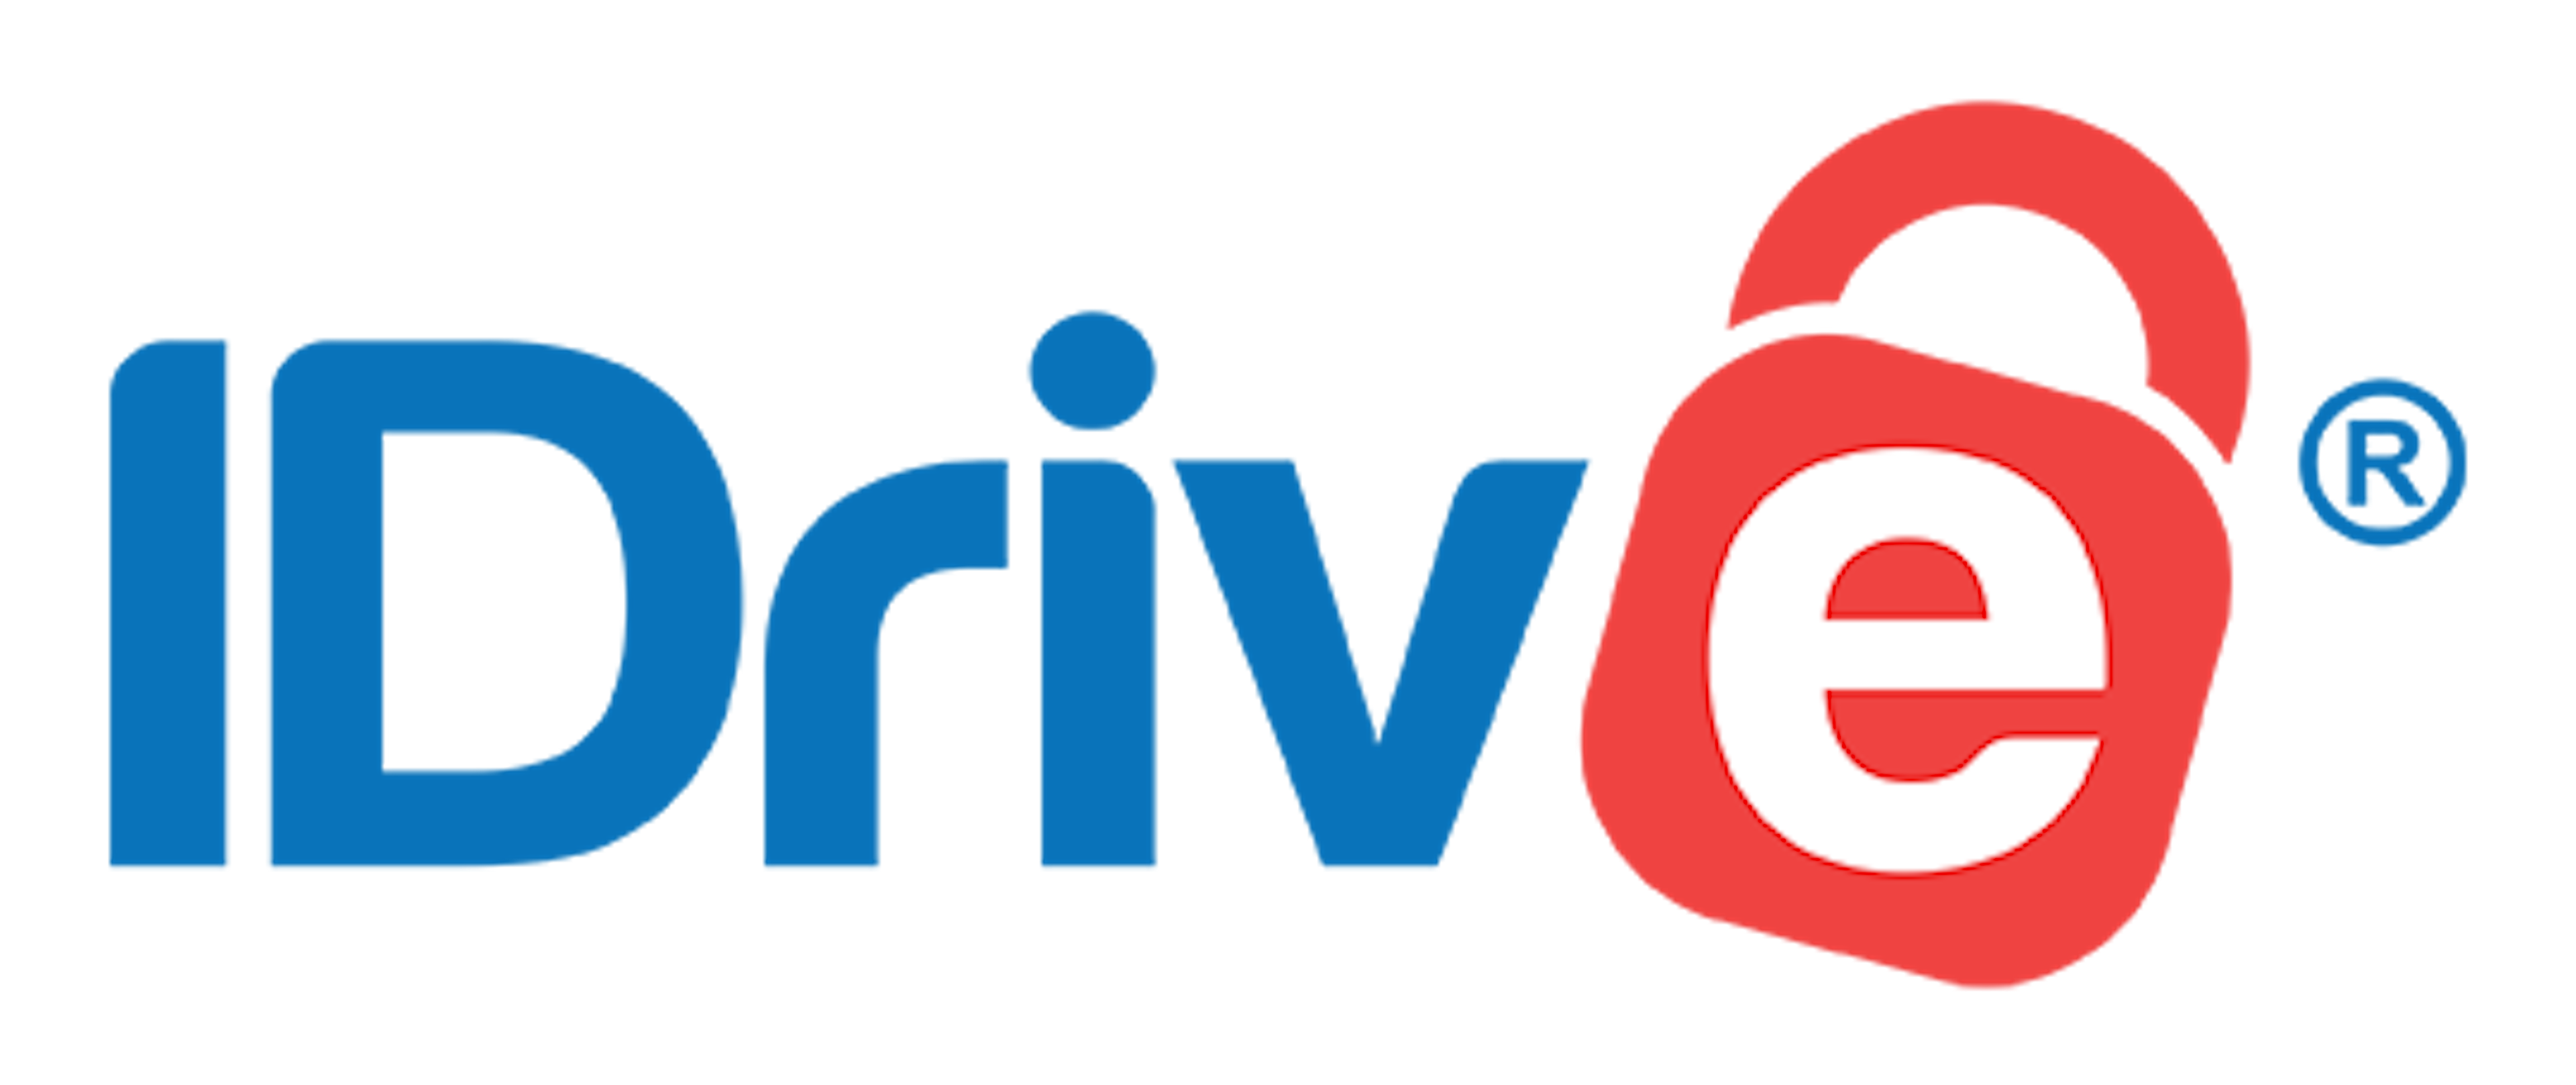 IDrive Logo